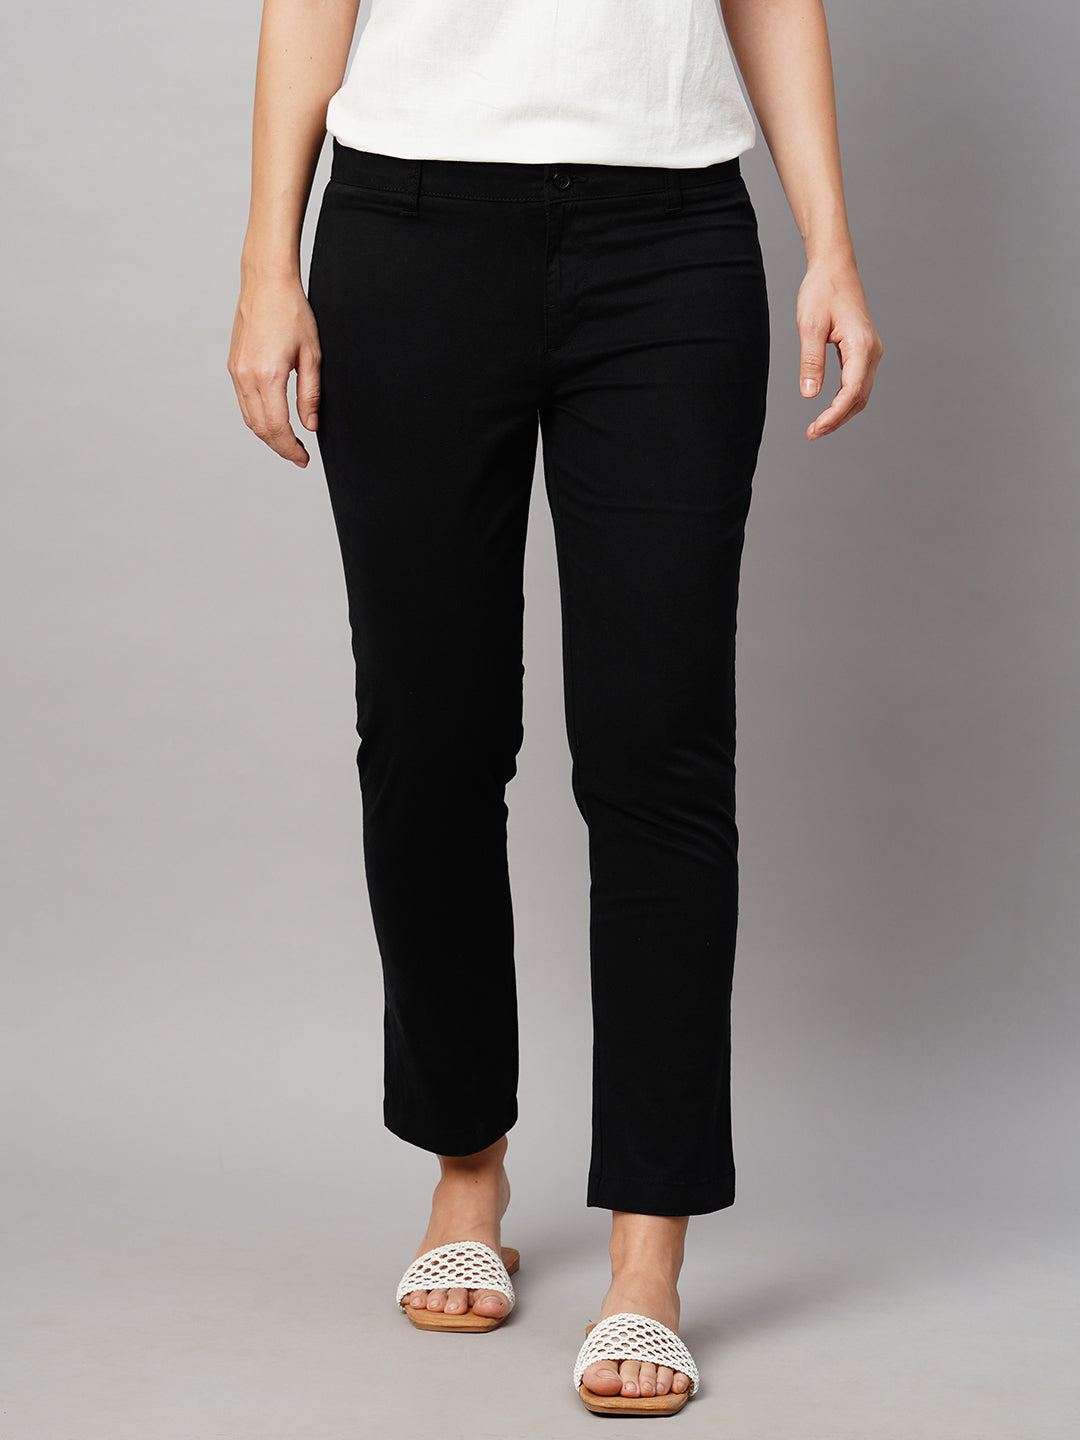 Women's Black Cotton Lycra Regular Fit Pant